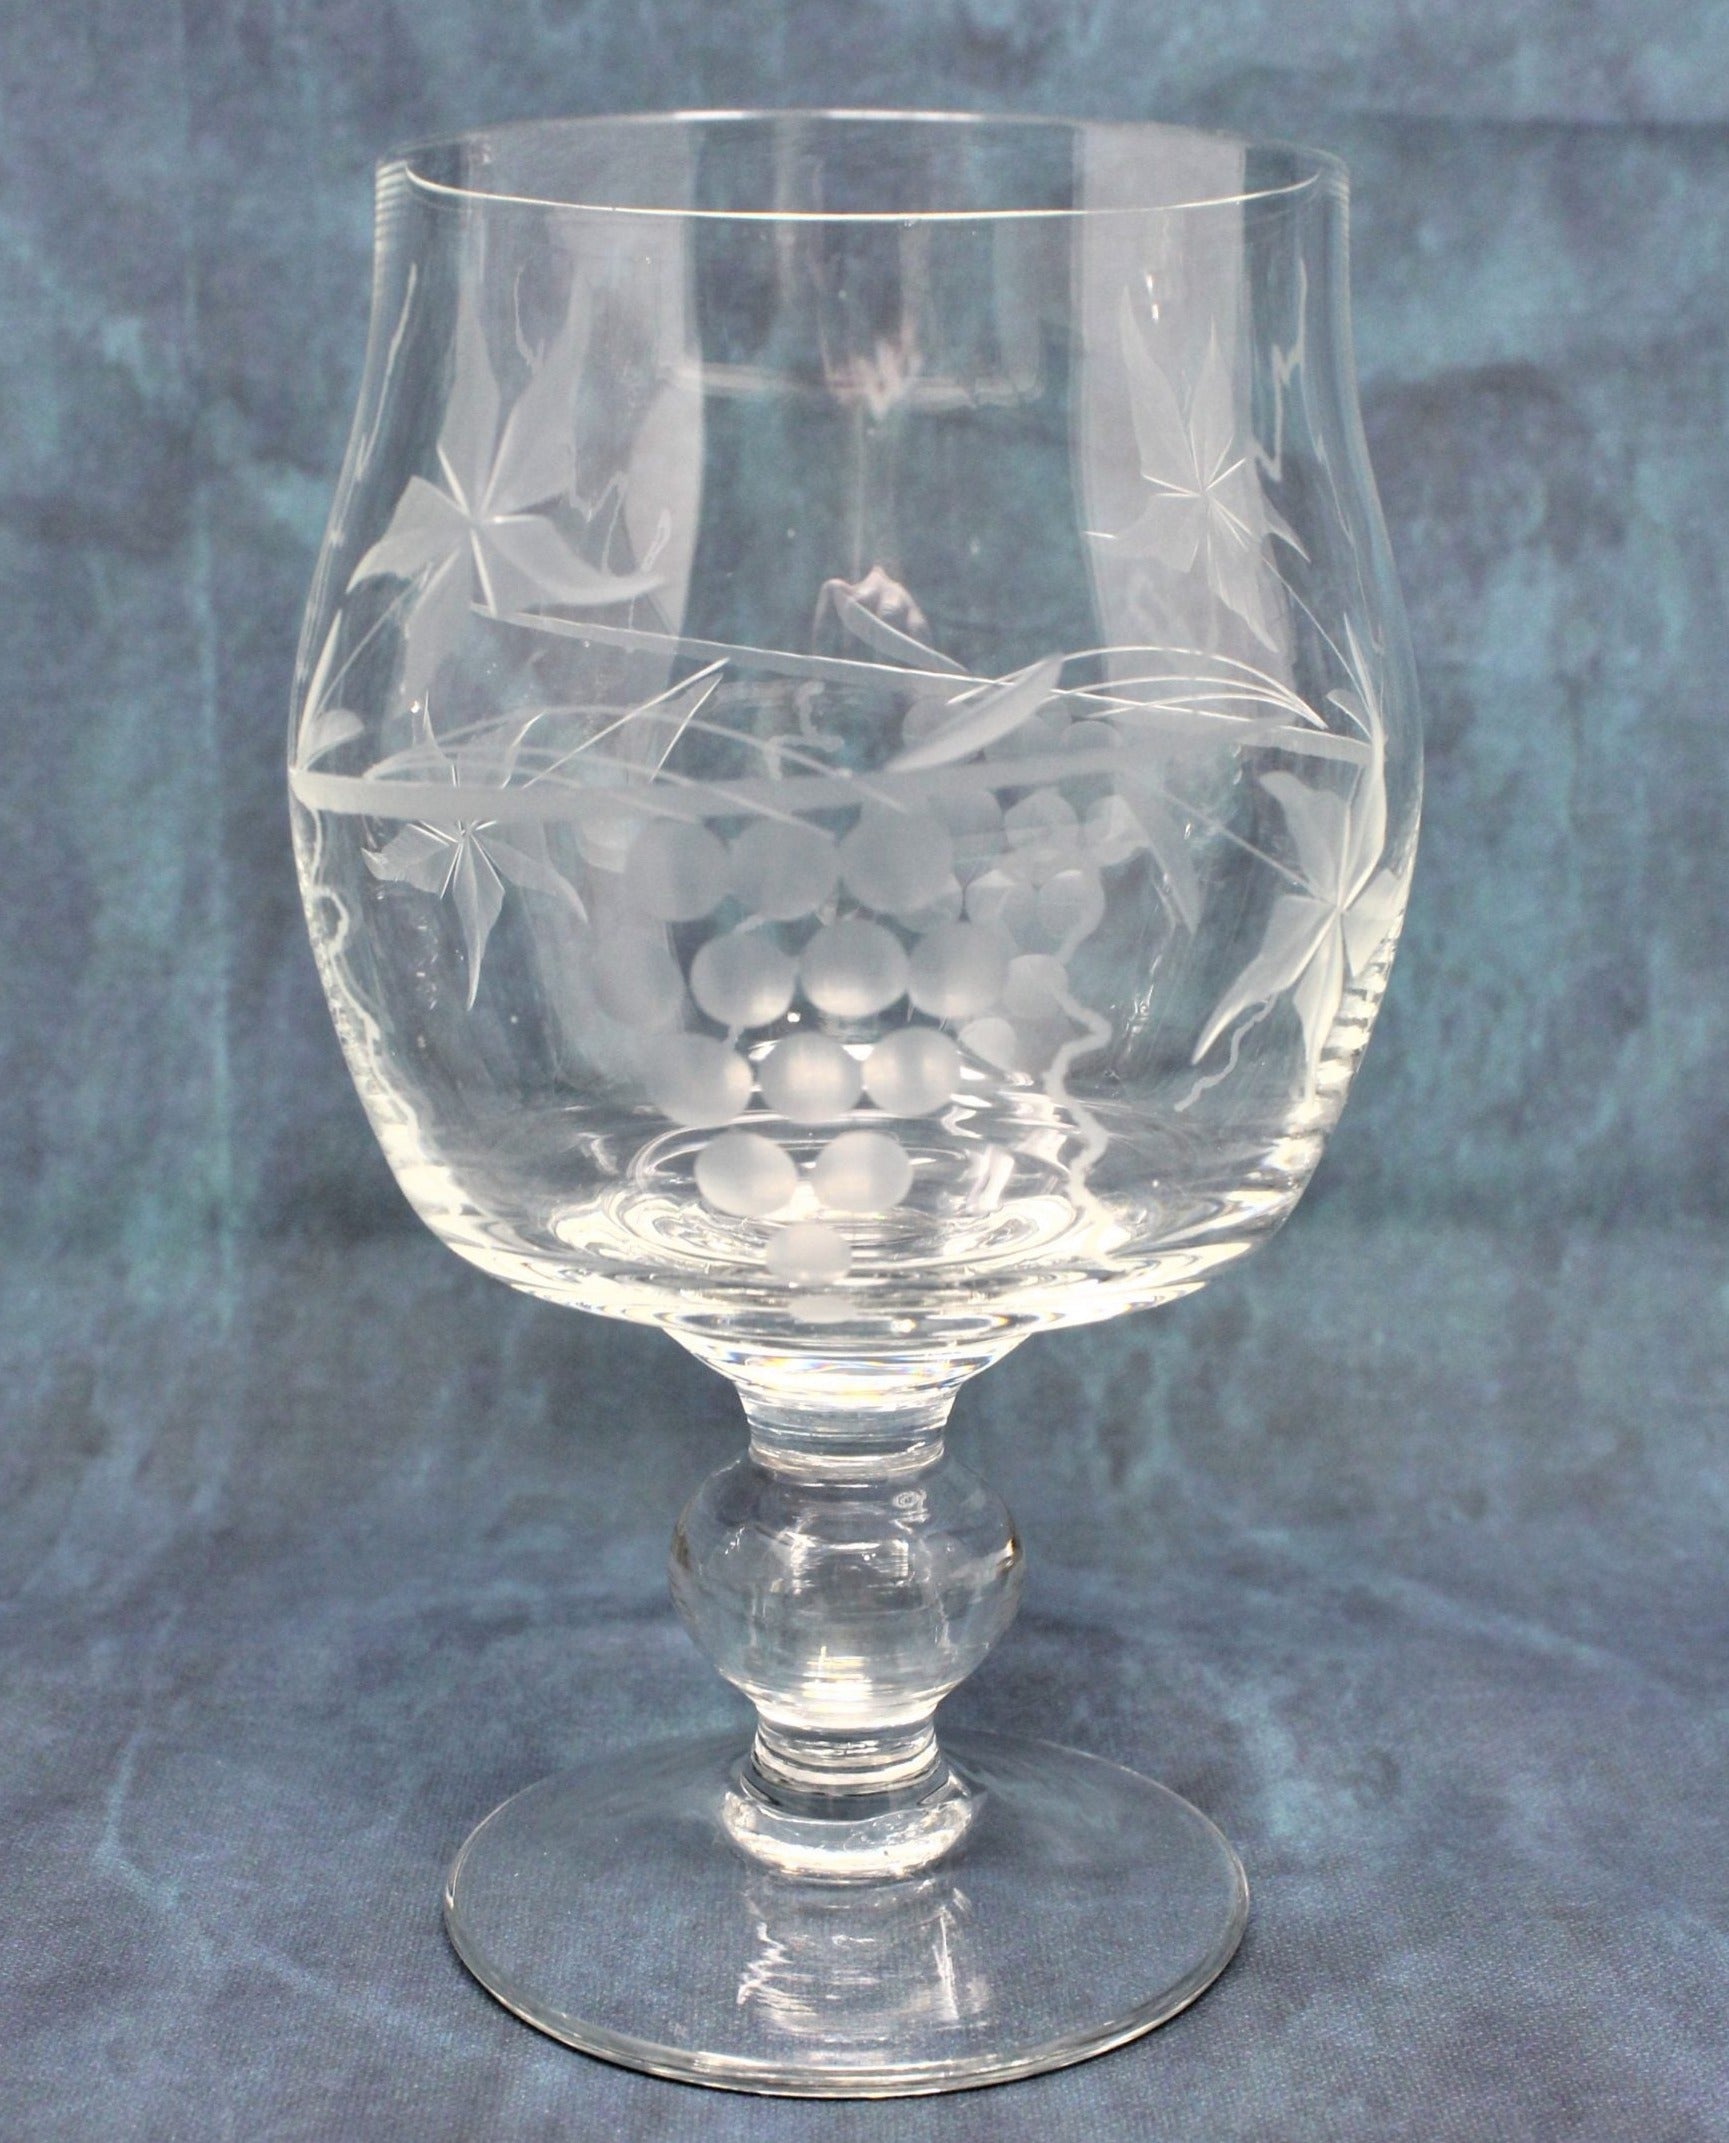 2 Antique or Vintage Etched Wine Glasses Set, Crystal Goblets, Water Glasses,  Wine Glasses, Tall Stem Tulip Glasses, 8 Tall. -  Israel